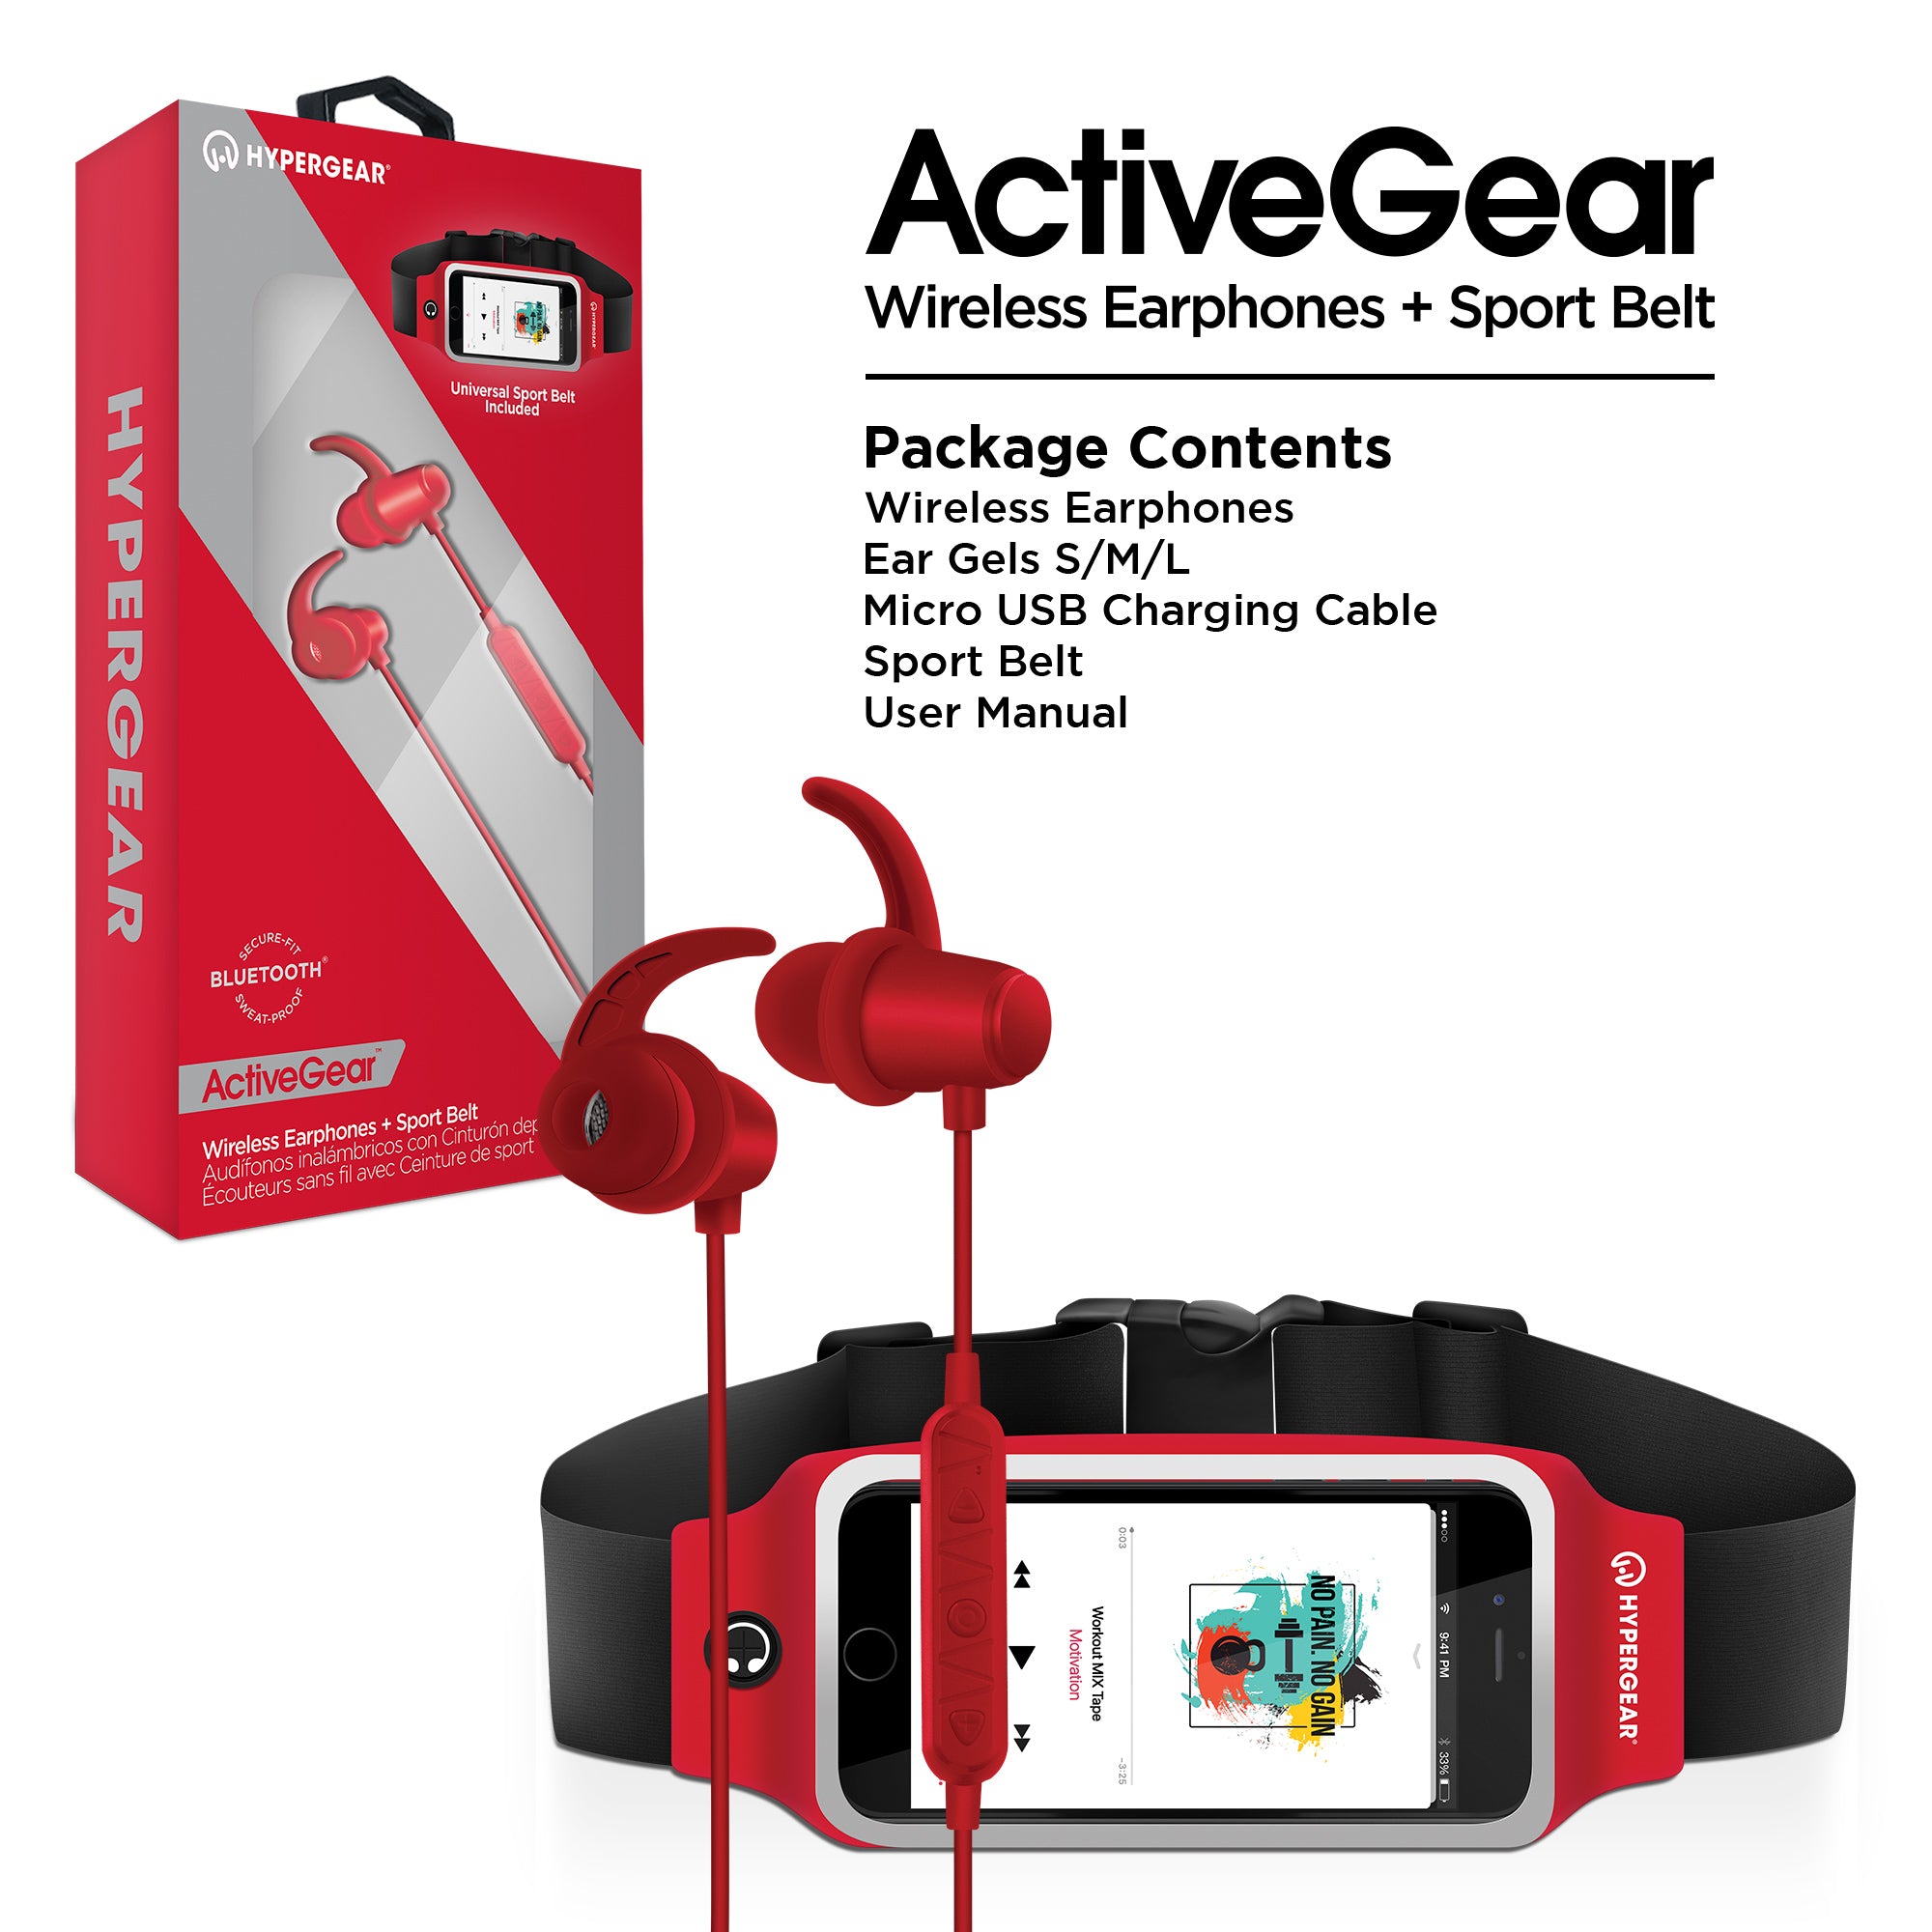 ActiveGear Wireless Earphones + Sport Belt Set